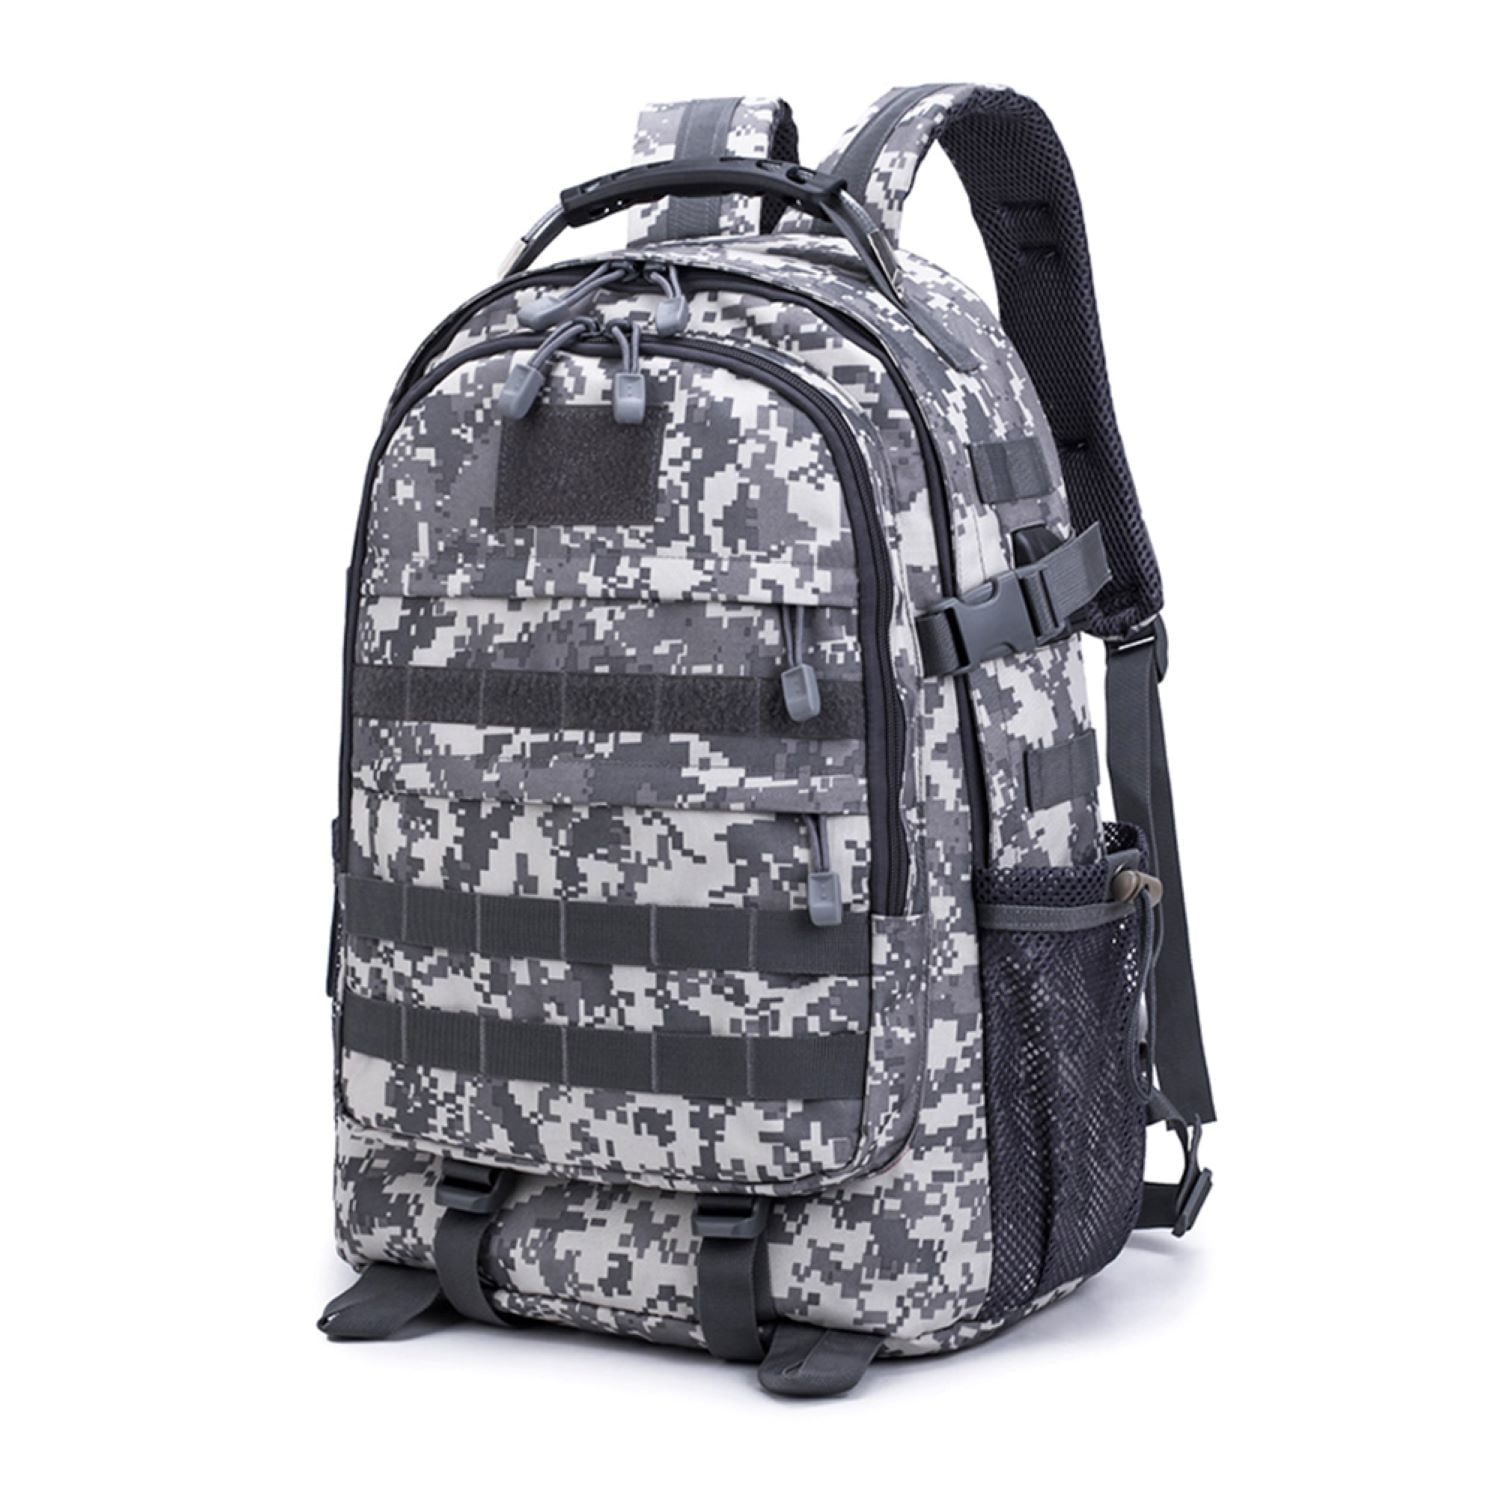 Fight Club Movie Opening Line Backpack Daypack Rucksack Laptop Shoulder Bag with USB Charging Port